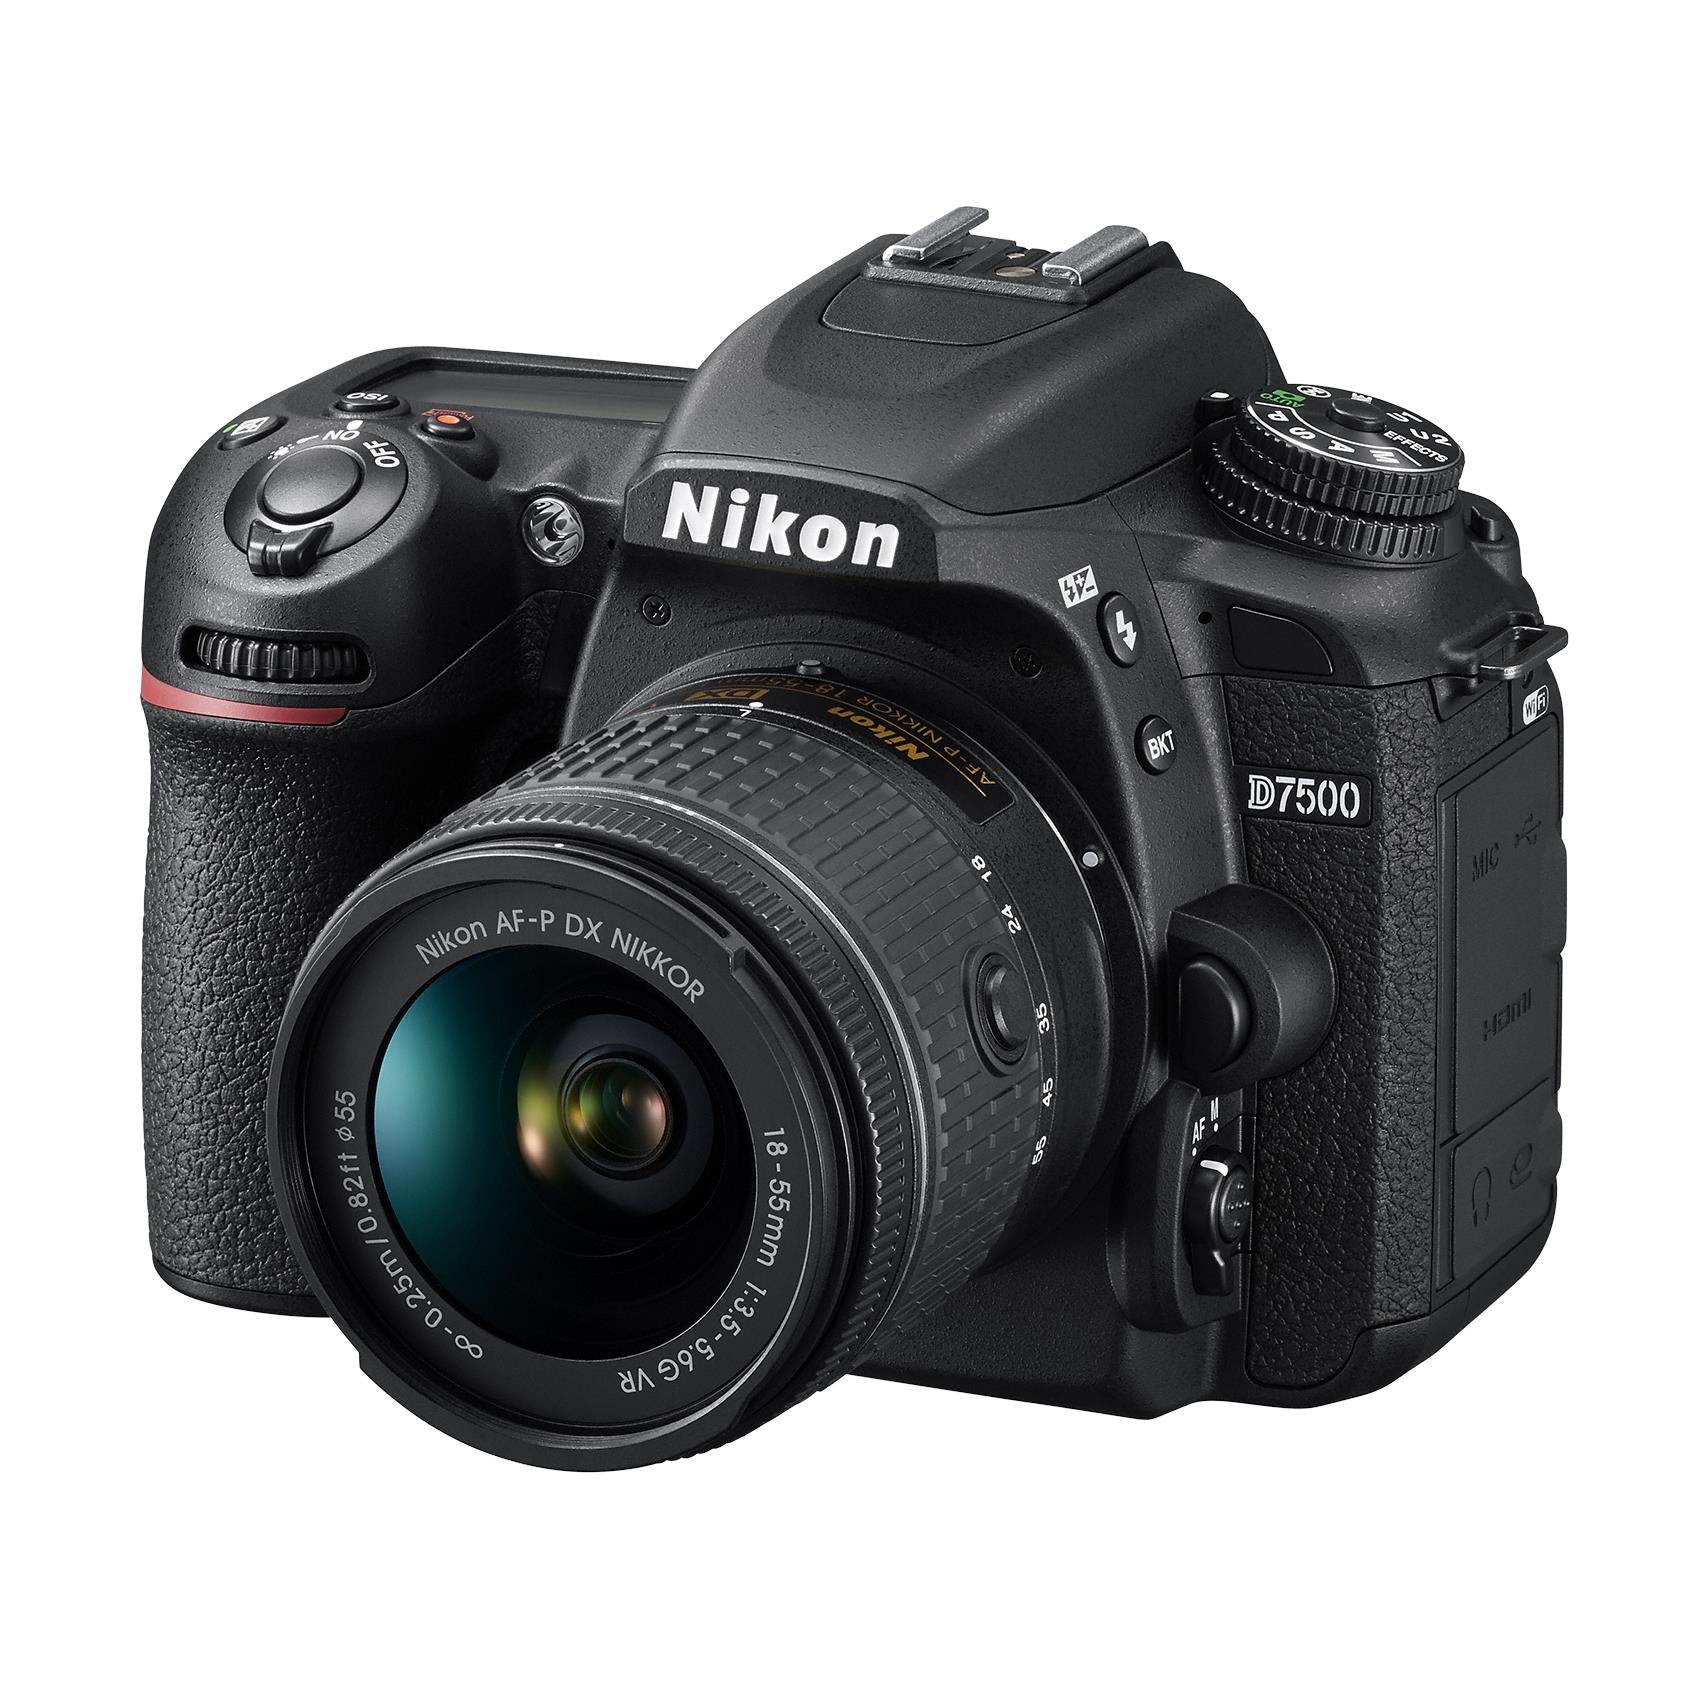 nikon d7500 dslr camera with 18-55mm lens [4k video]